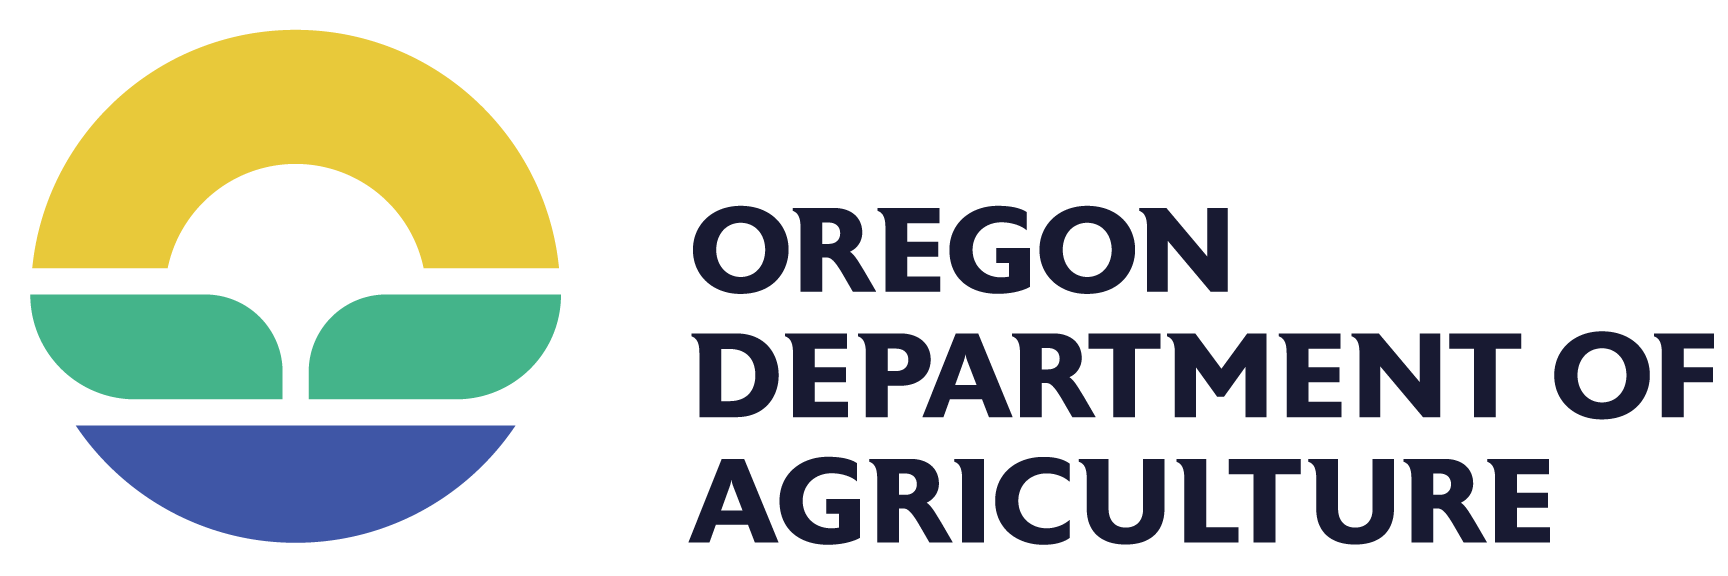 Oregon Department of Agriculture Logo